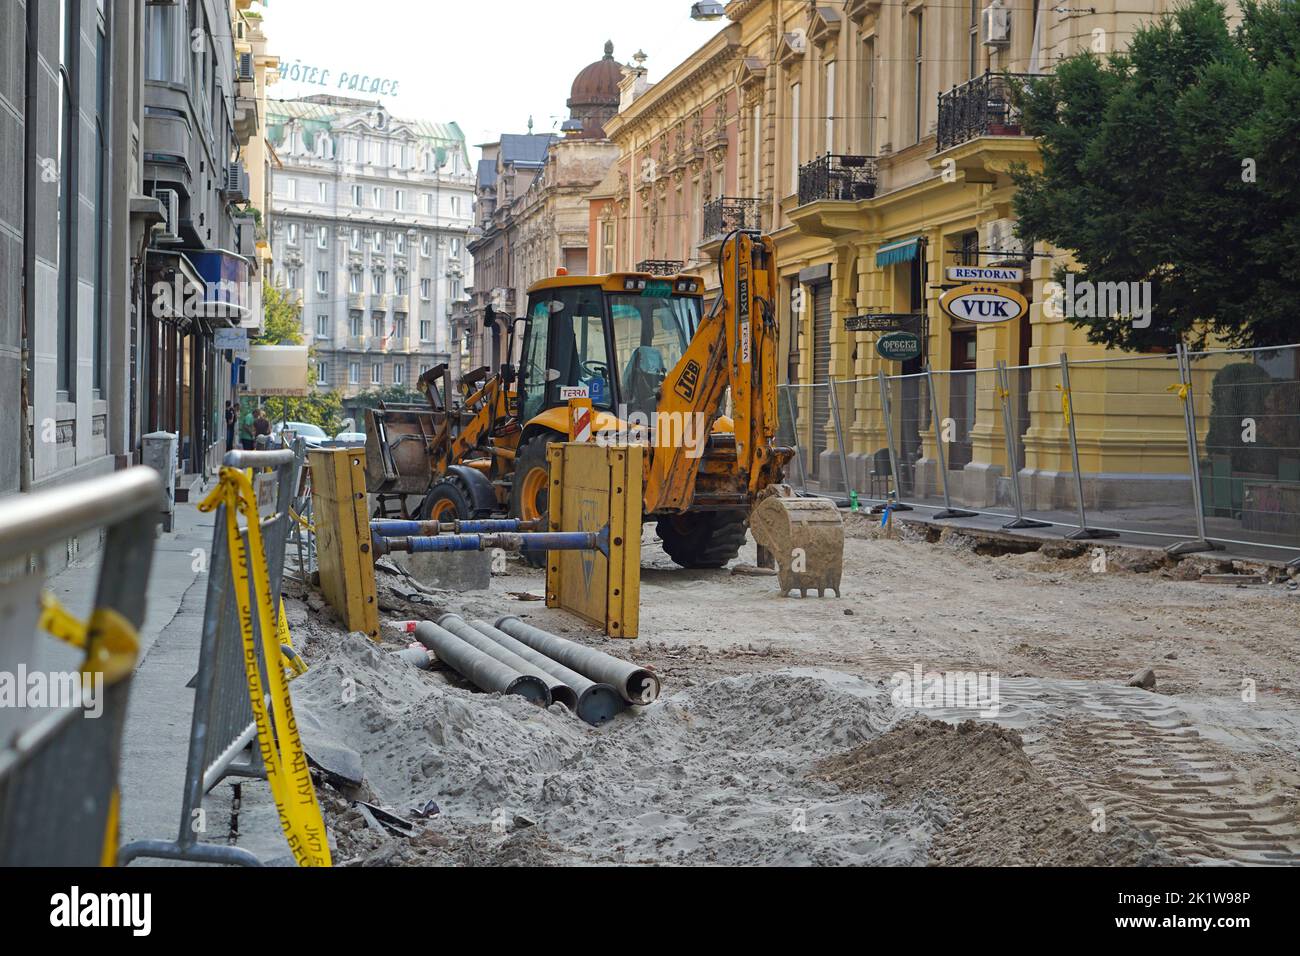 Belgrade, Serbia - August 30, 2015: Jcb backhoe loader at street construction site in capital city center summer works. Stock Photo